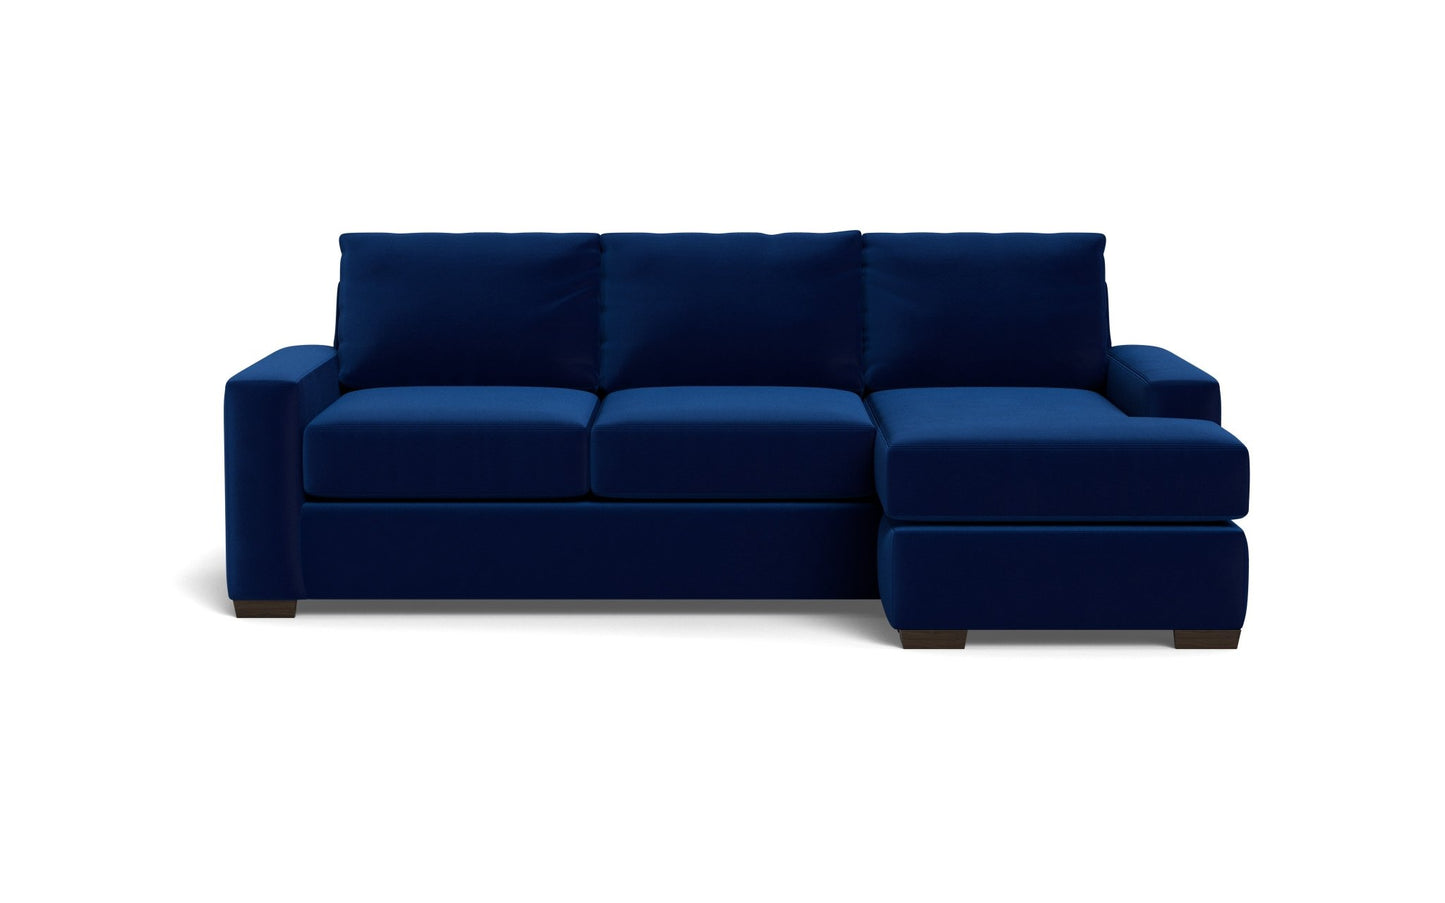 Mas Mesa Reversible Sofa Chaise